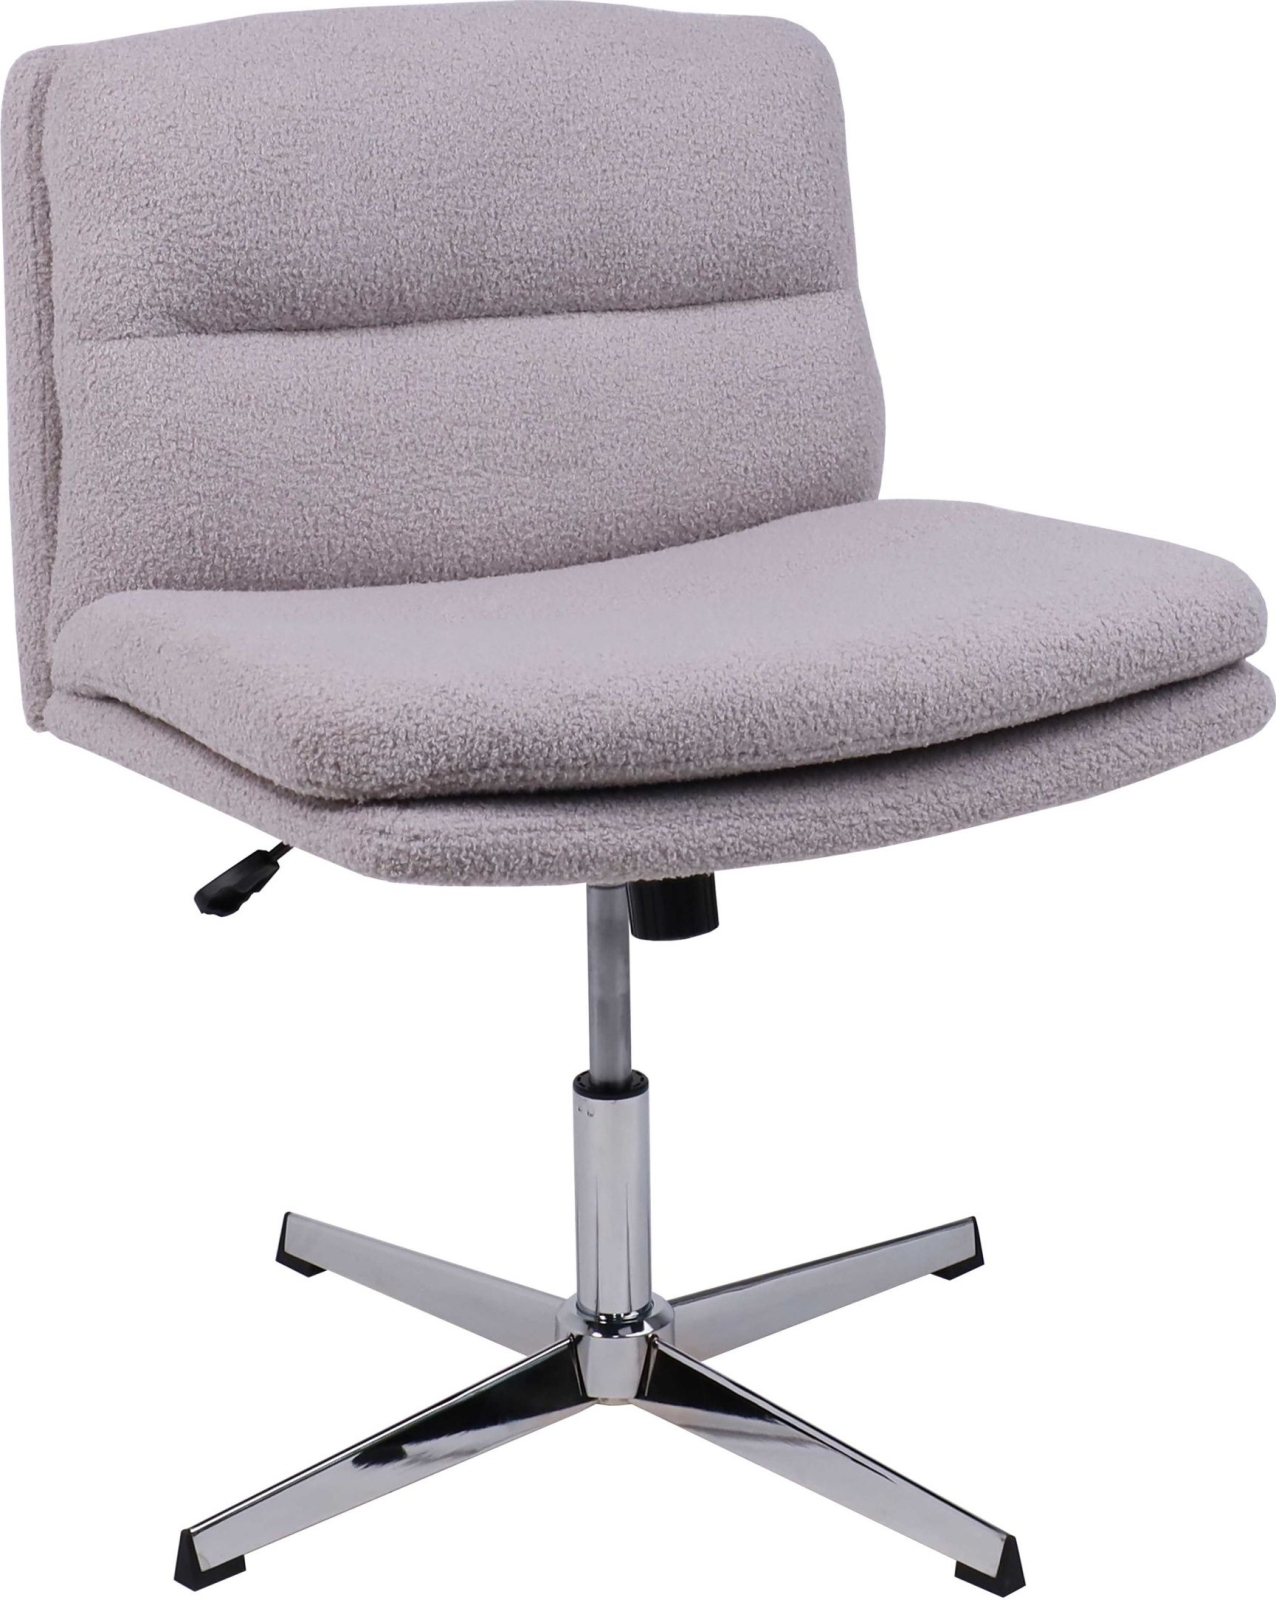 Кресло компьютерное AKSHOME Andre светло-серый букле CM2023-8/хром (105414)